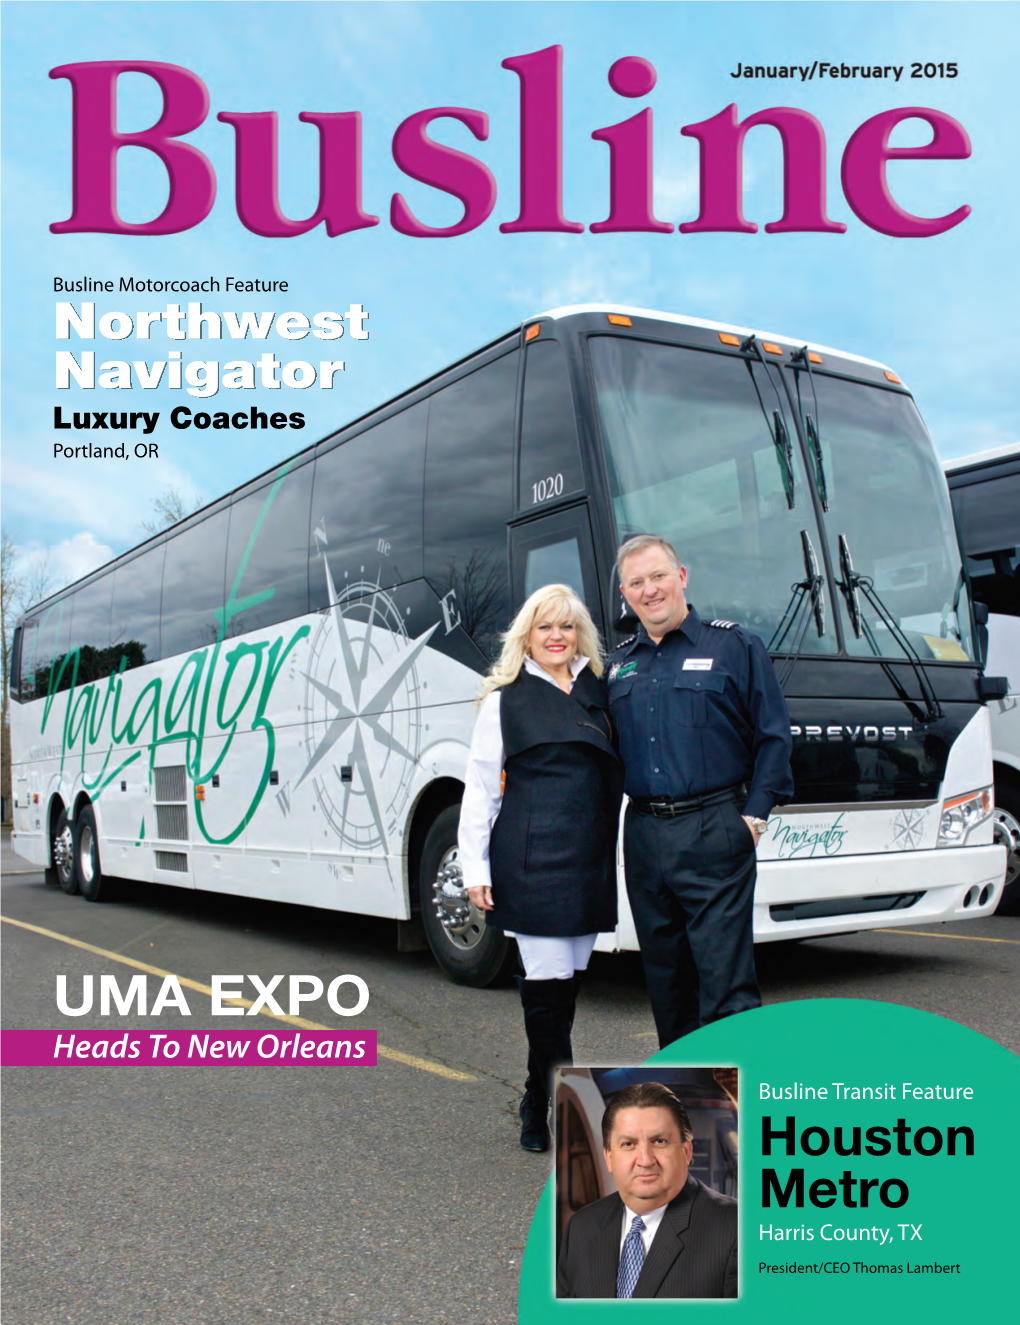 UMA EXPO Heads to New Orleans Busline Transit Feature Houston Metro Harris County, TX